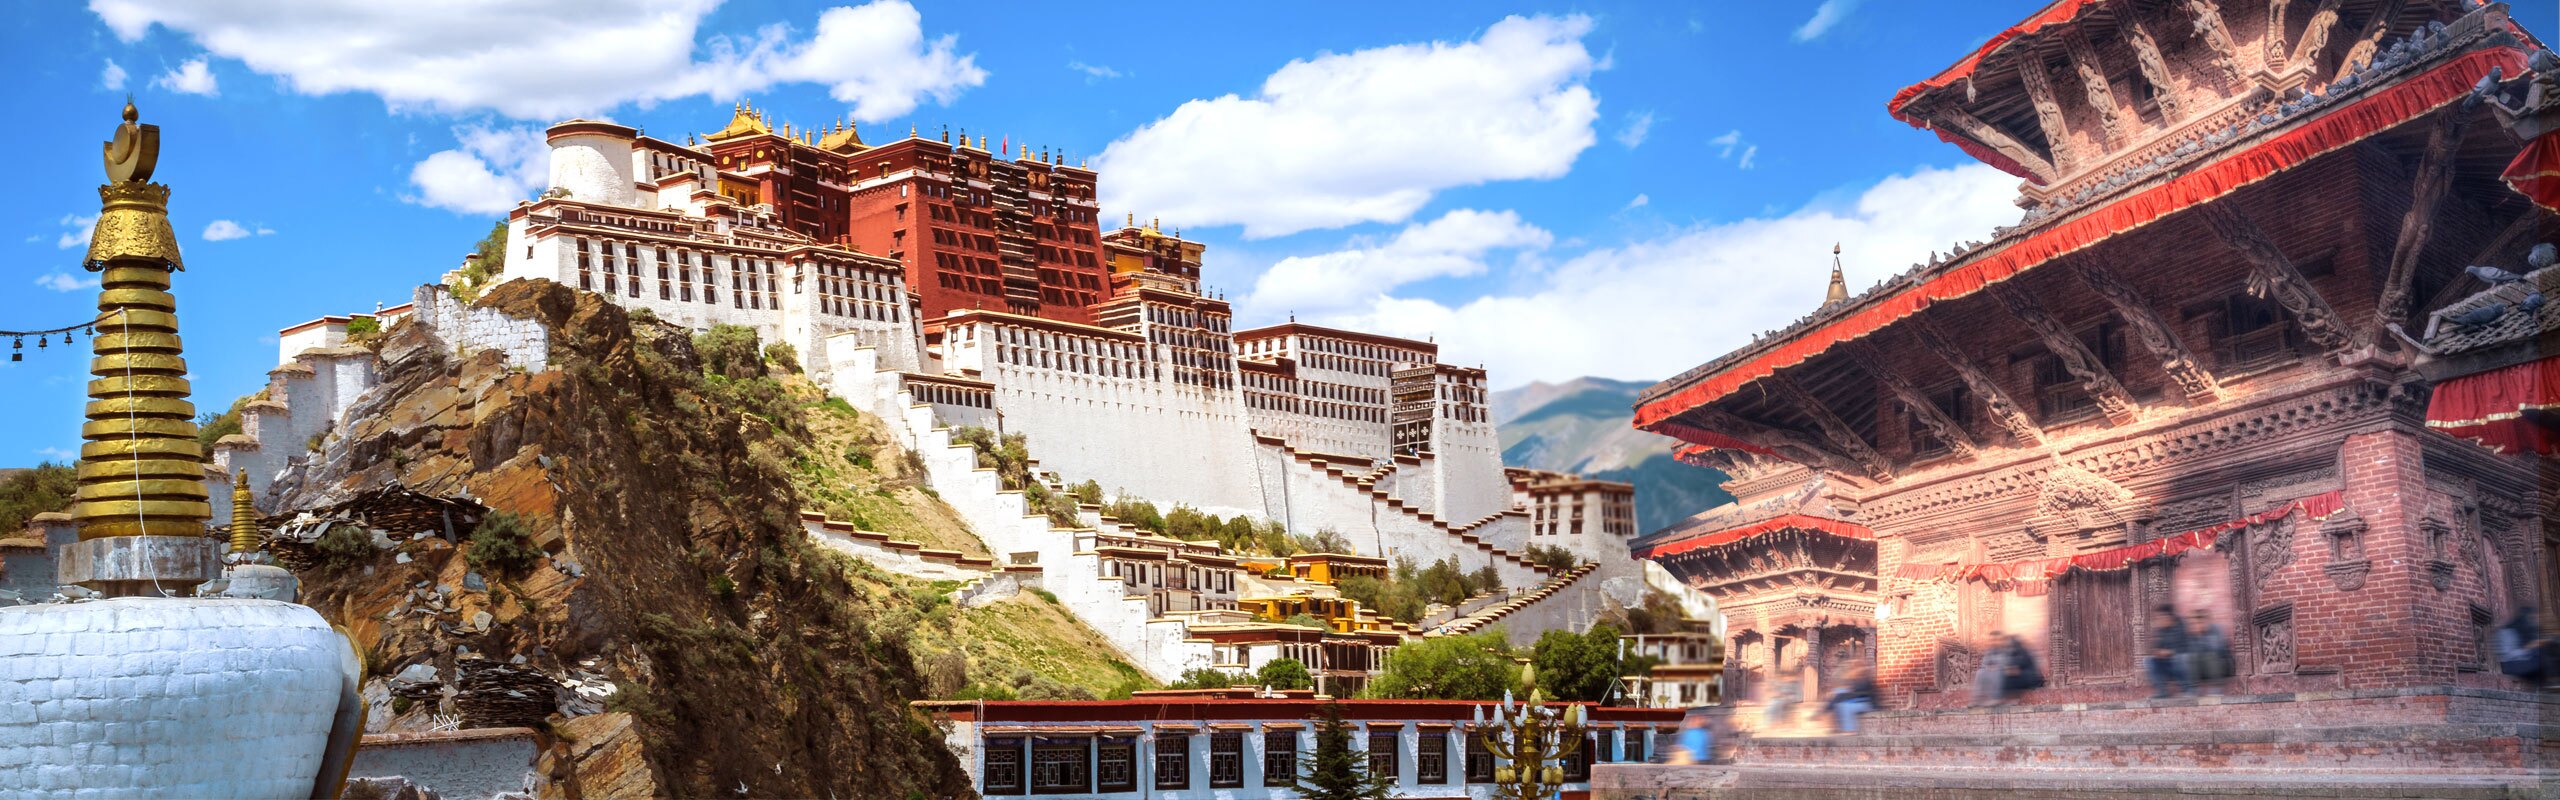 15-Day Tibet, Xian and Luoyang Tour